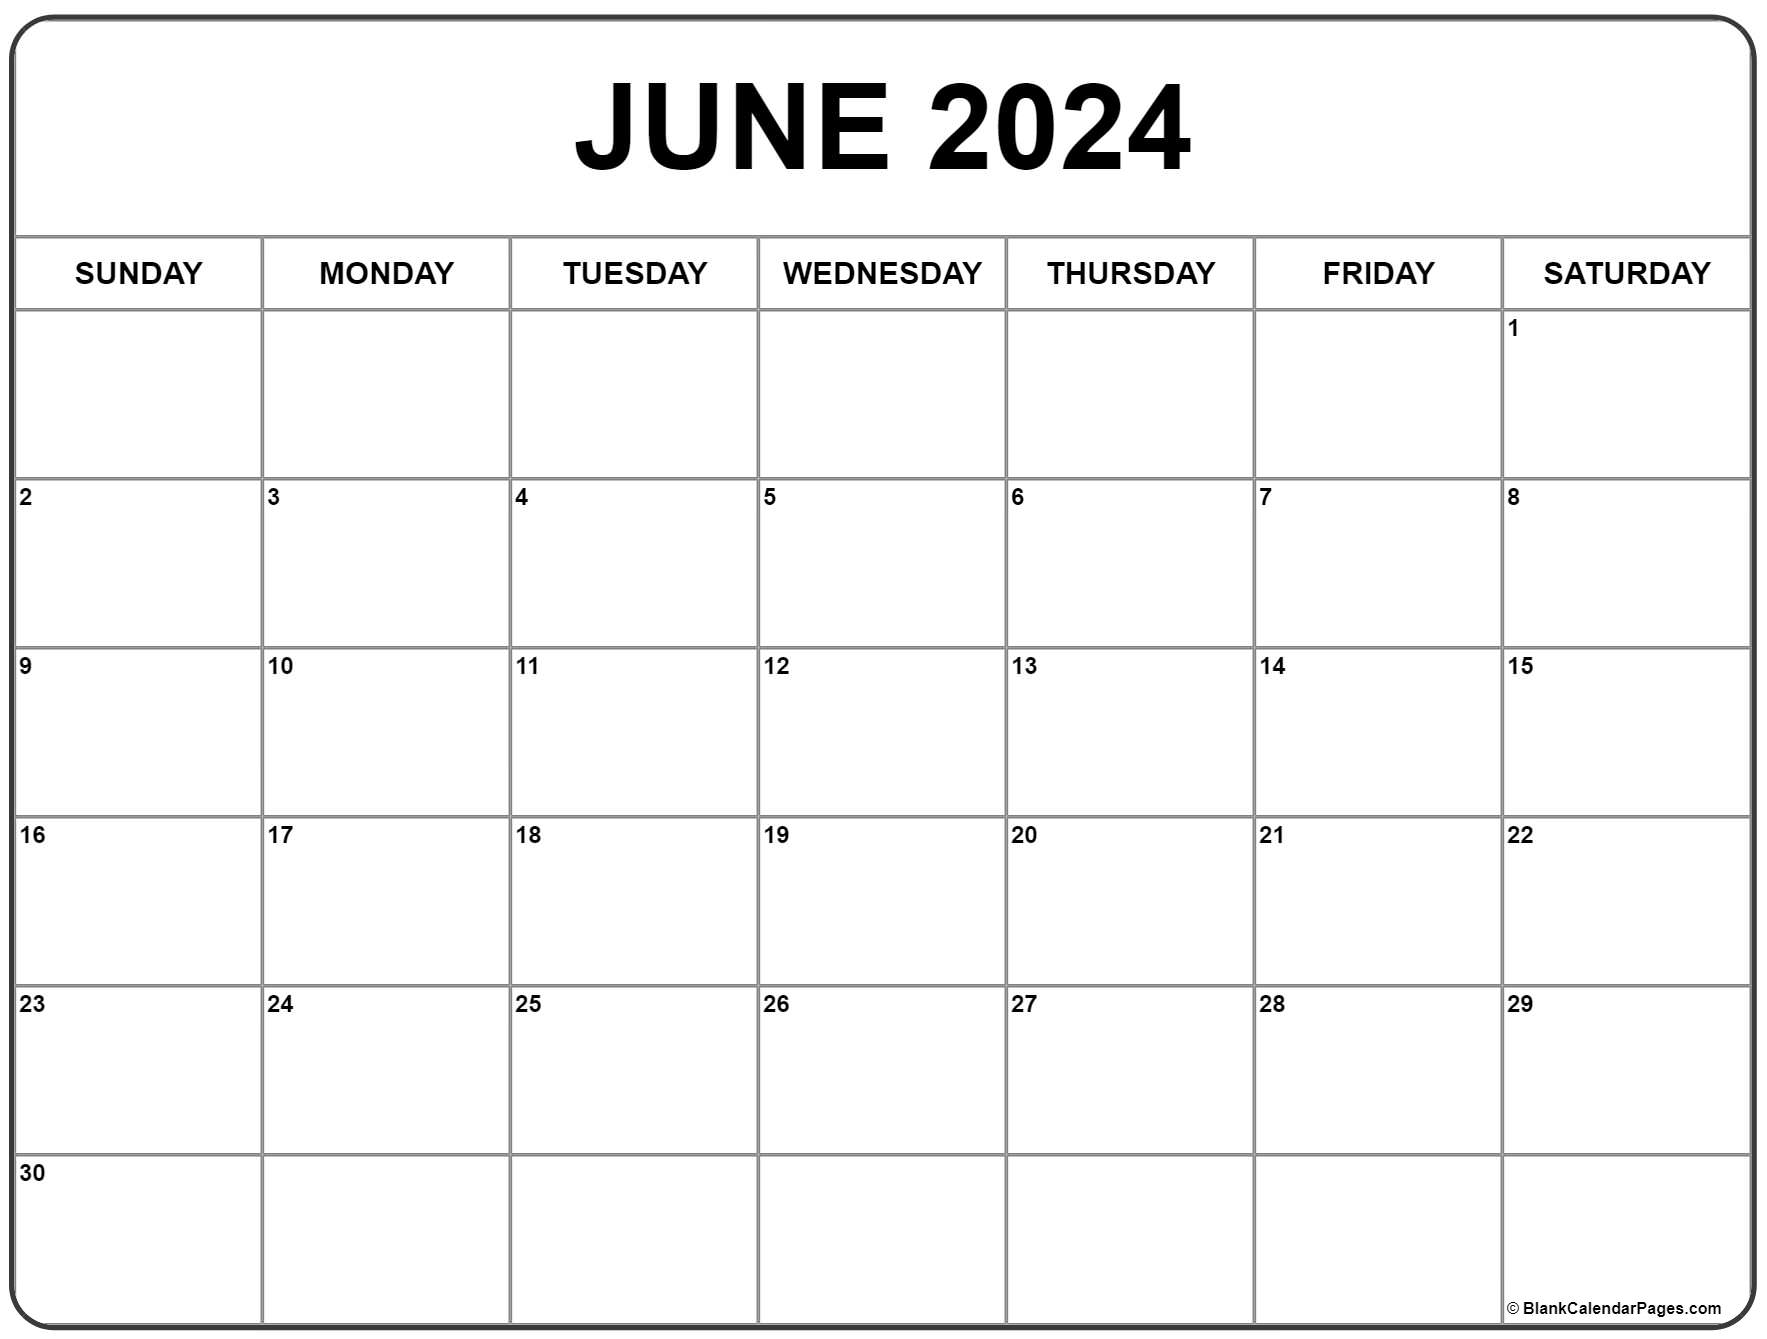 June 2024 Calendar | Free Printable Calendar for Calendar 2024 Printable June